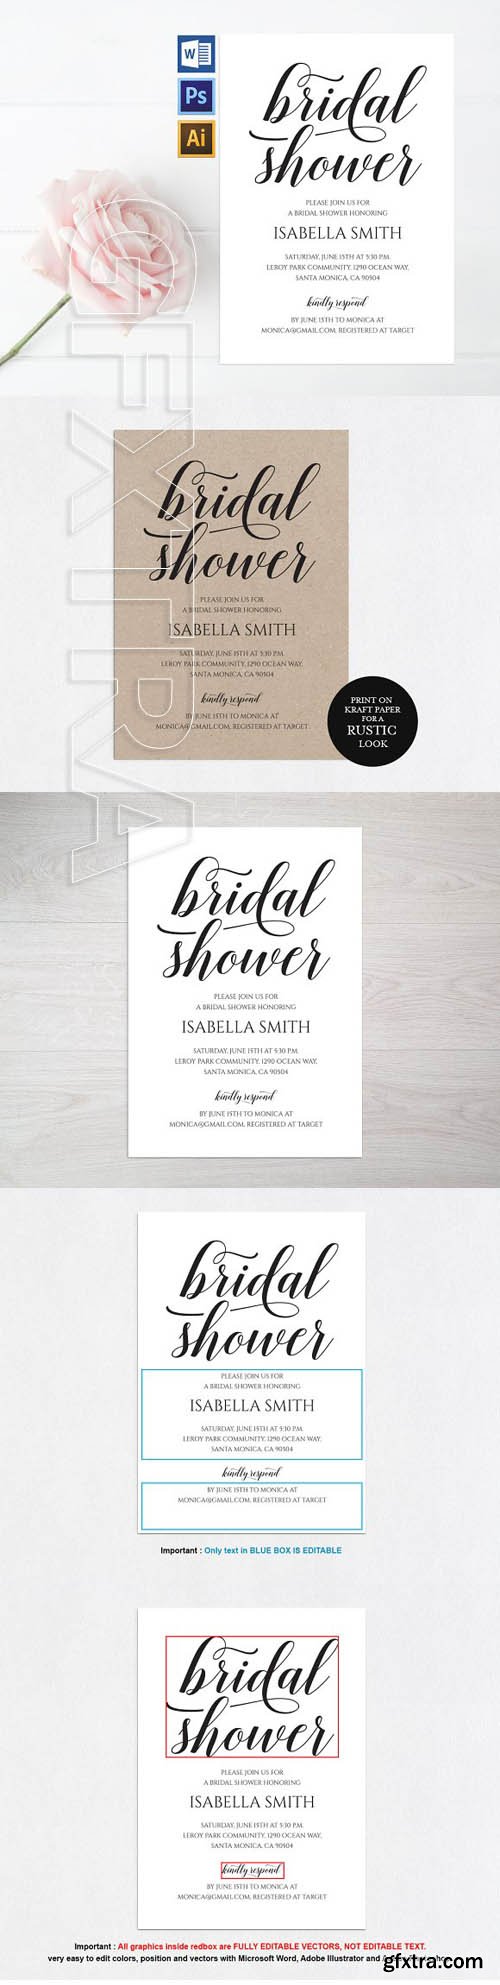 CreativeMarket - Bridal Shower Invitation Wpc309 1765233